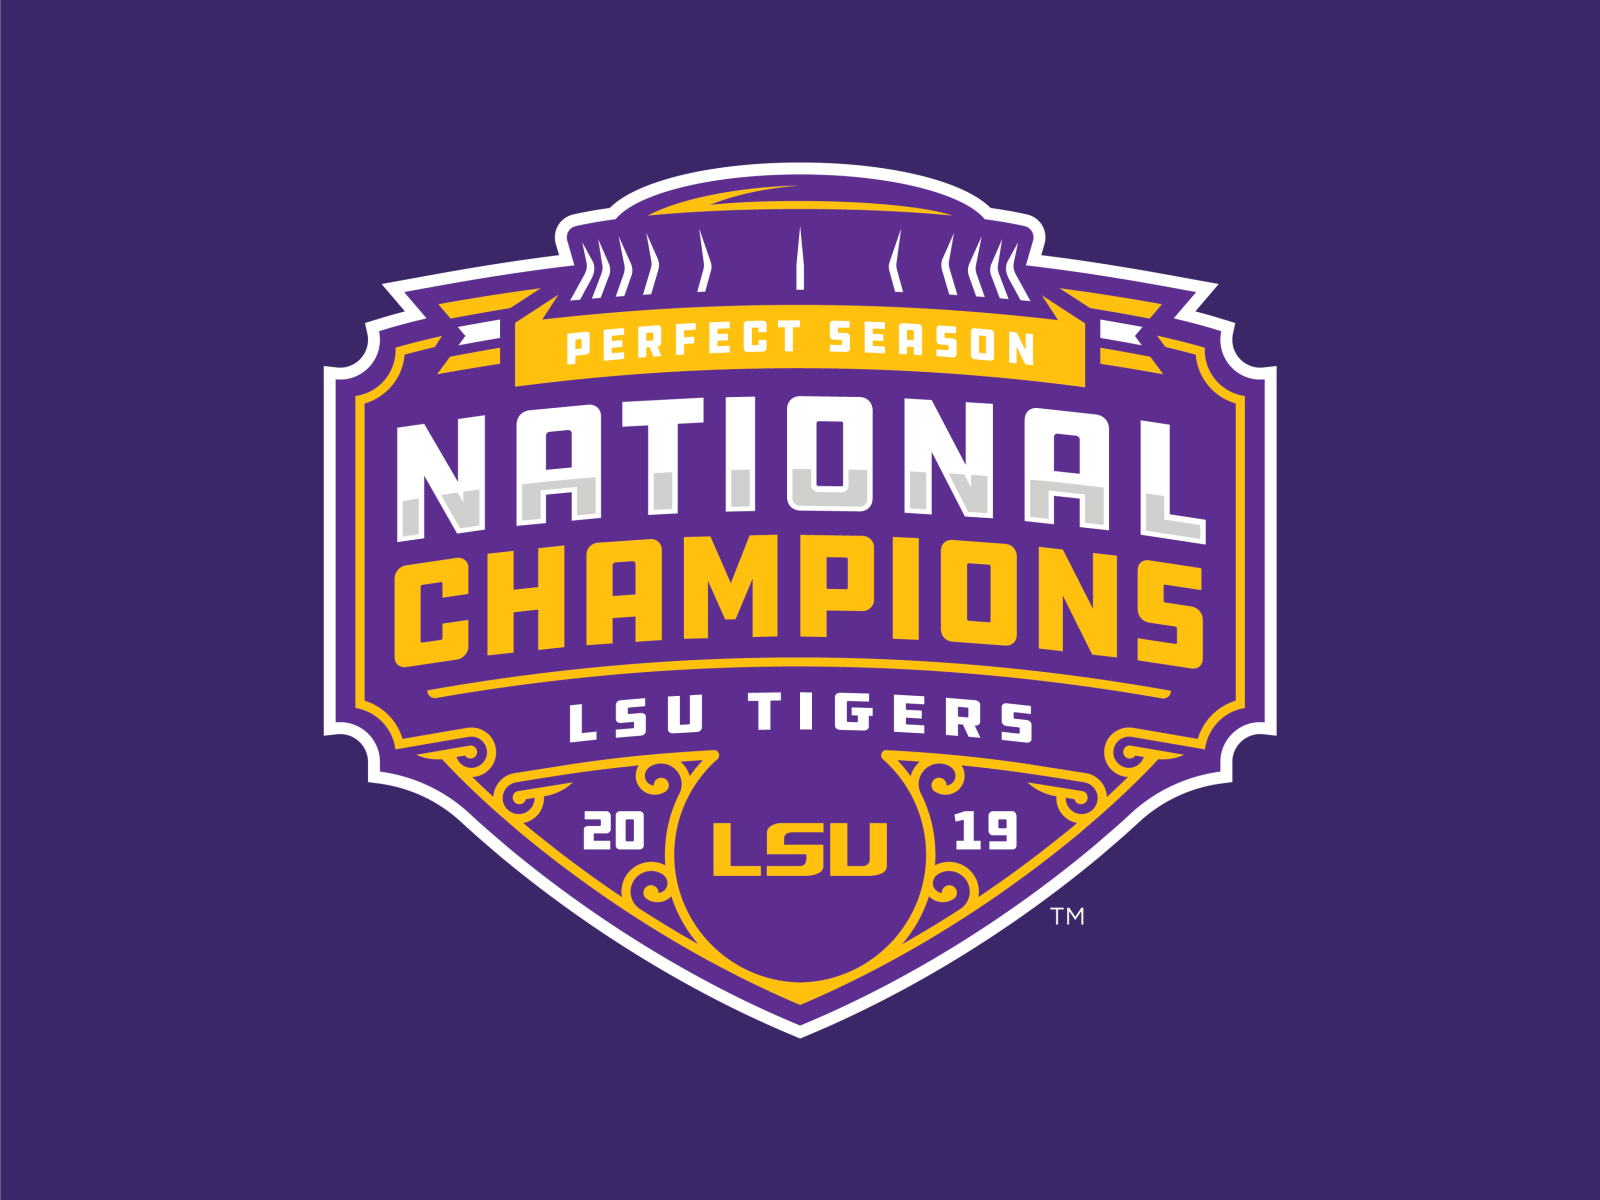 LSU TIGERS 2019 NATIONAL CHAMPIONS Logo Concept by Matthew Harvey